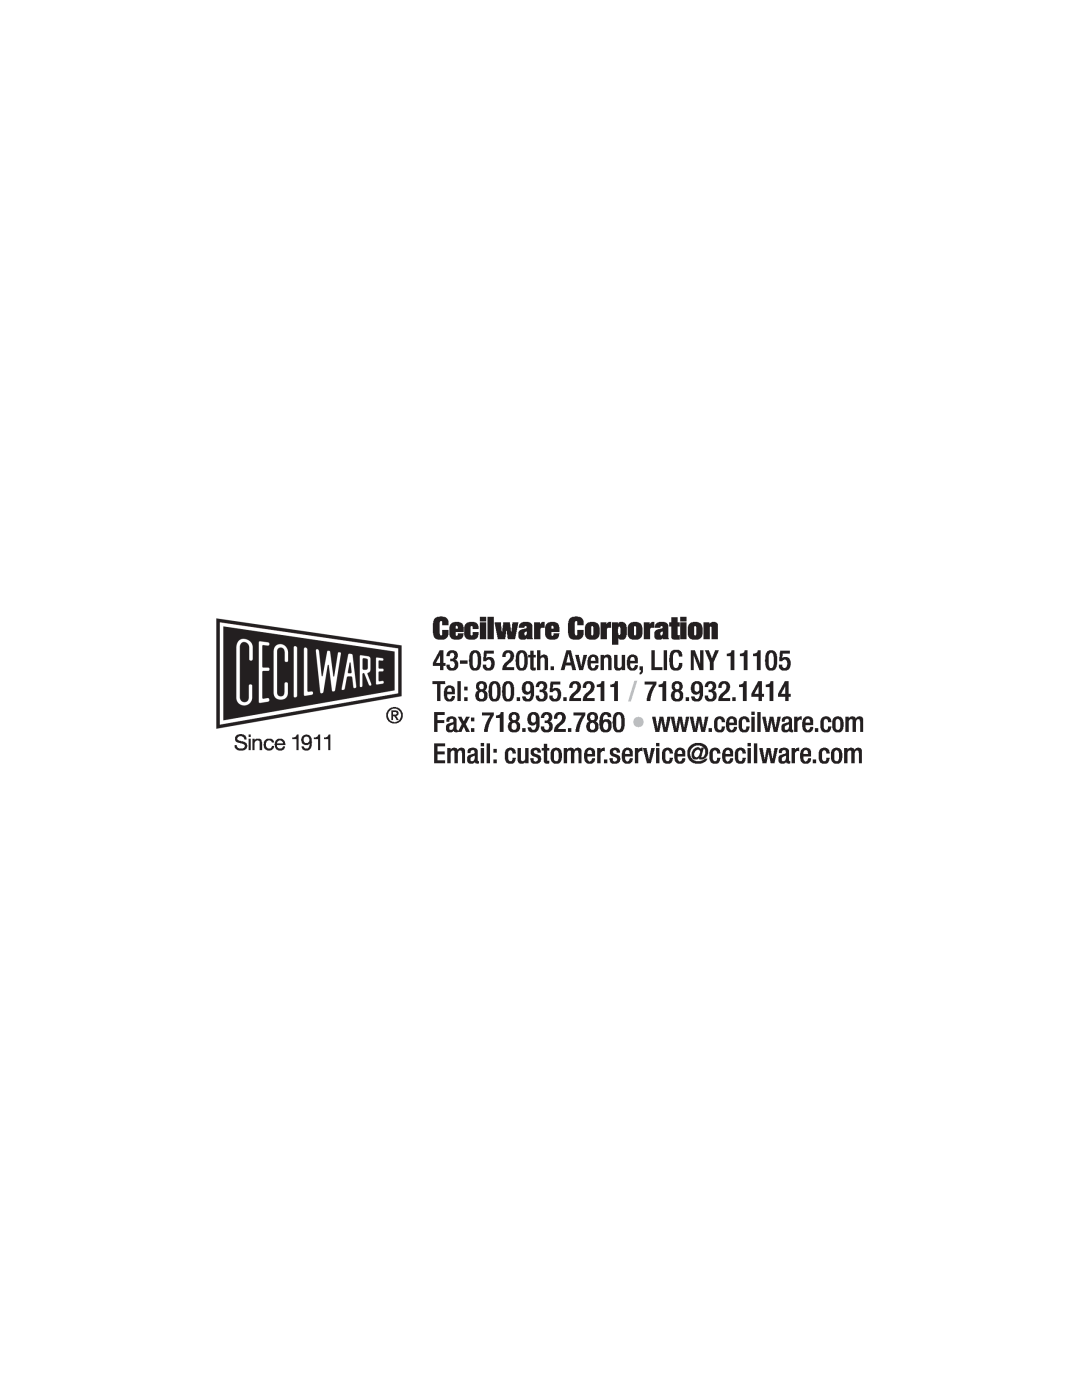 Cecilware HC-600 instruction manual Since, Cecilware Corporation, 43-0520th. Avenue, LIC NY Tel 